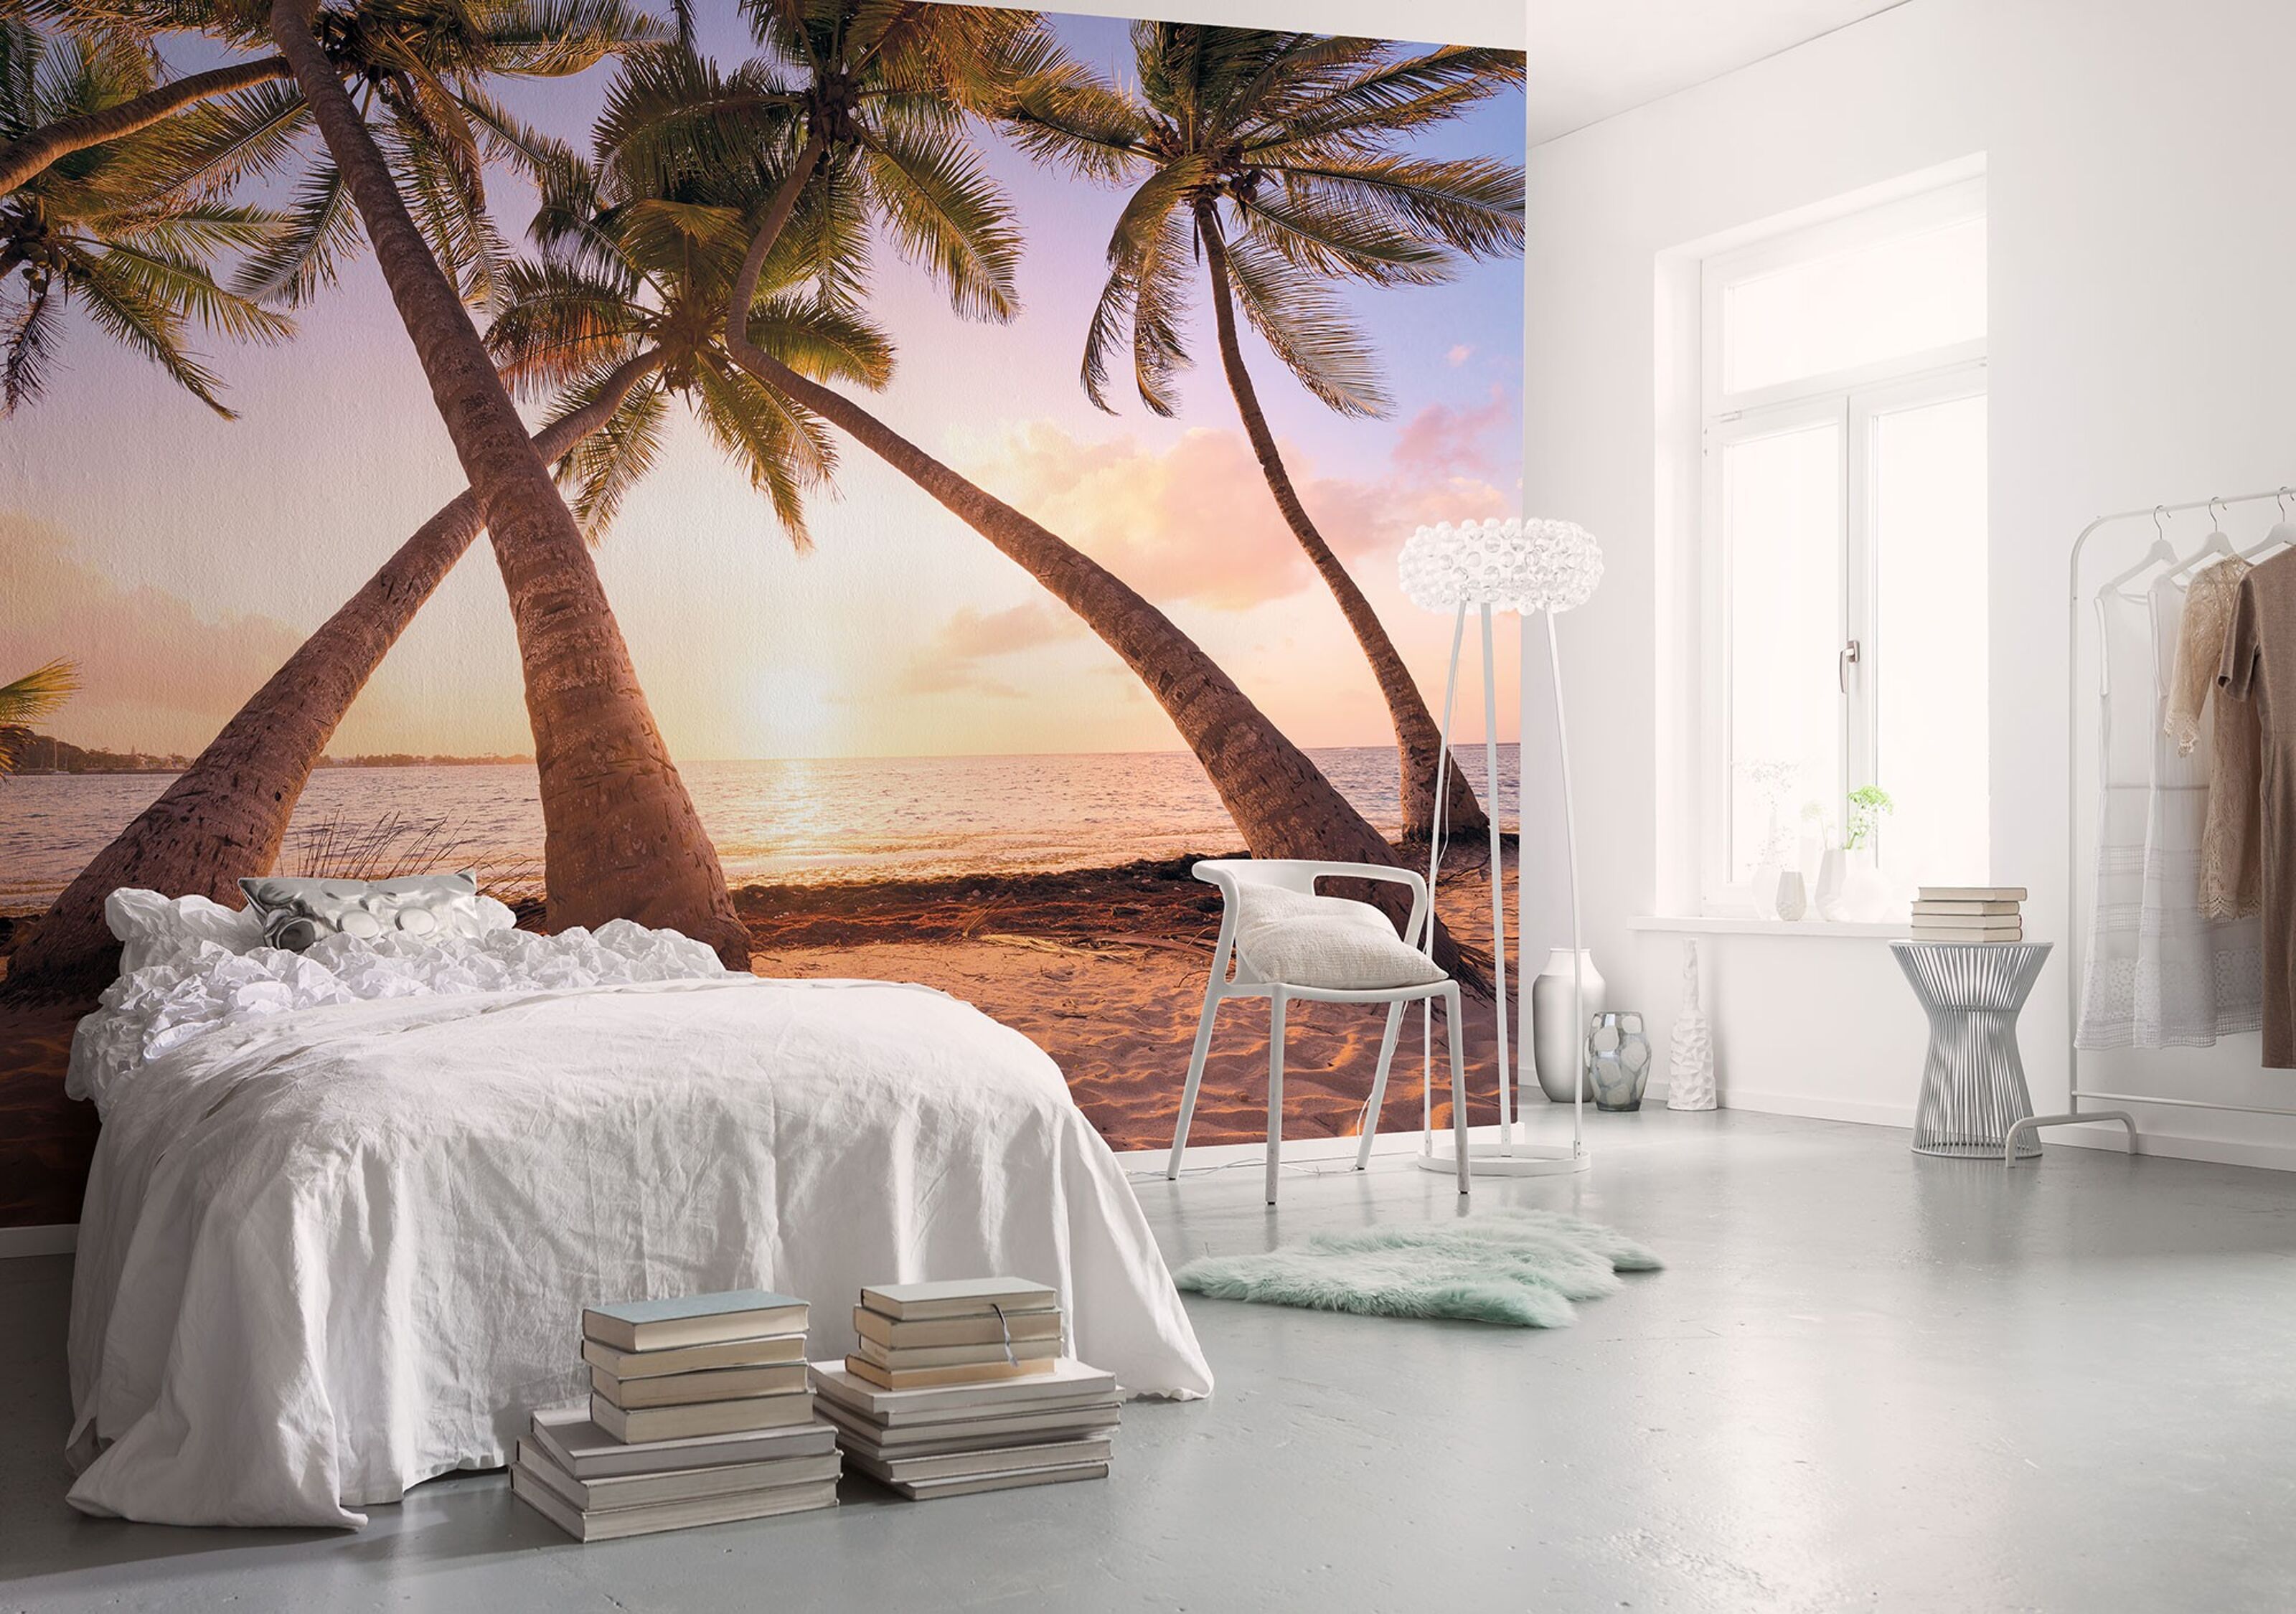 the Non-woven 250 size Buy photo wholesale cm x wallpaper Sun 400 - Reaching -